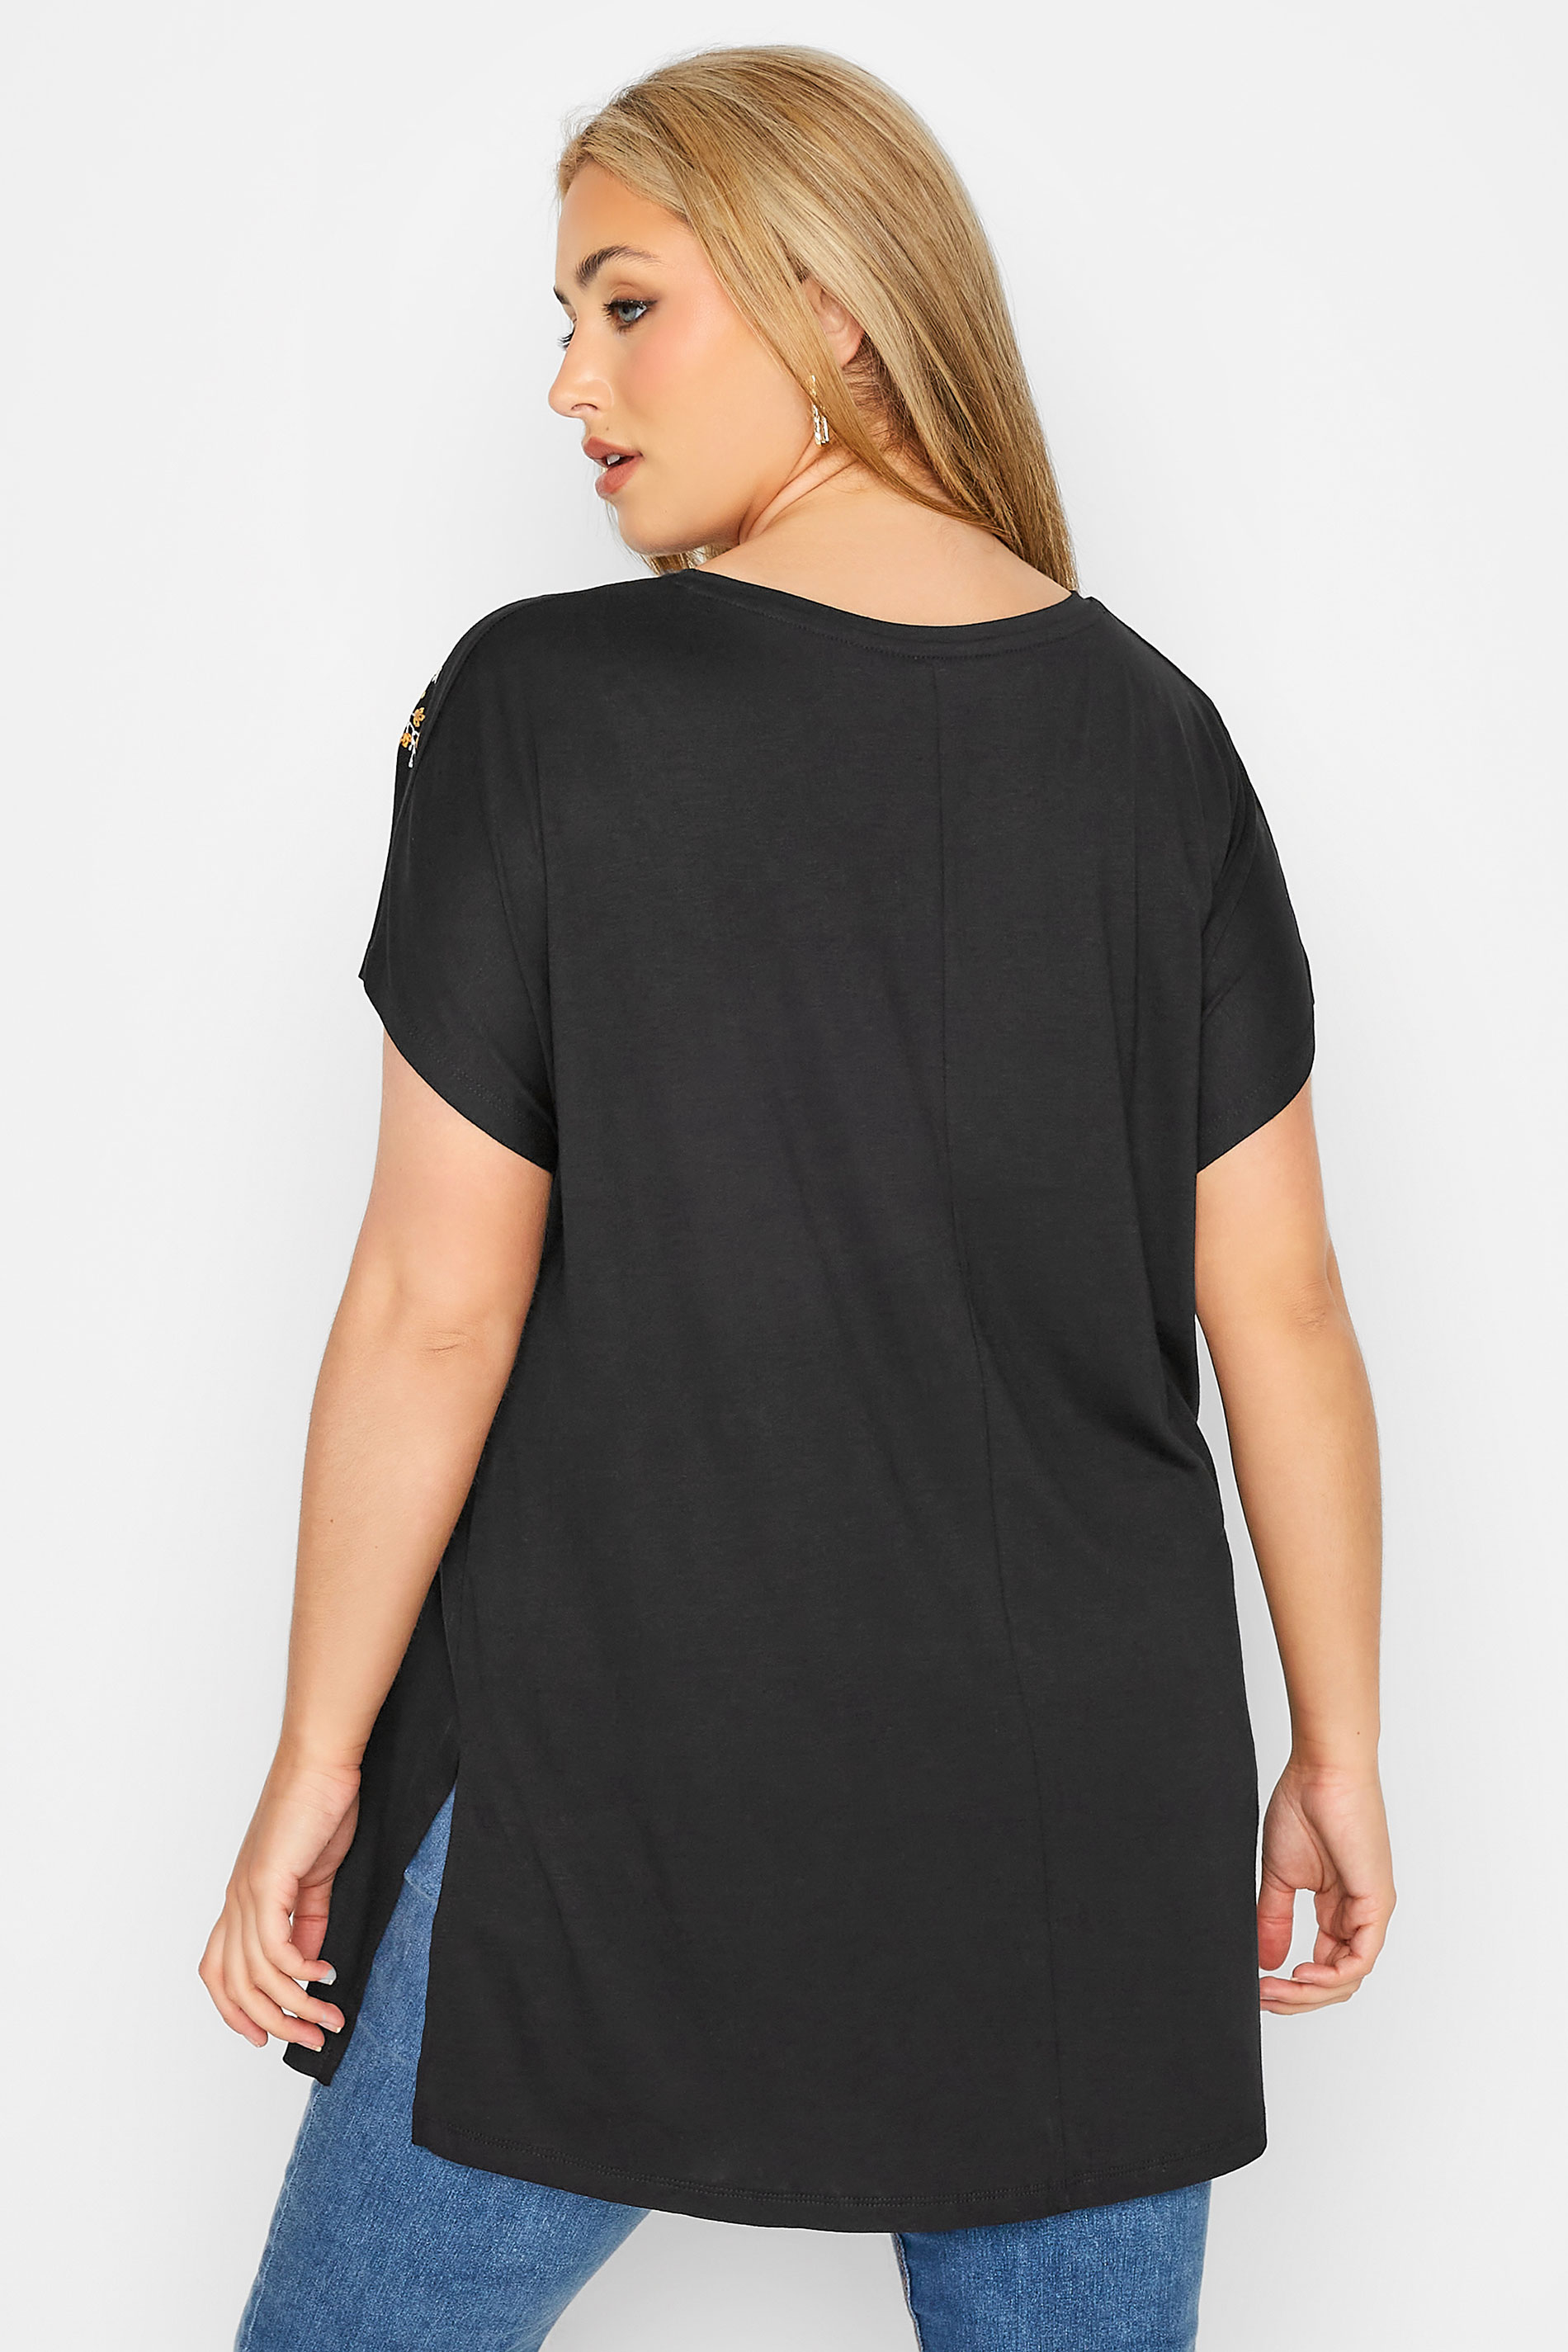 Grande taille  Tops Grande taille  T-Shirts | T-Shirt Noir Manches Courtes en Floral - IU44671